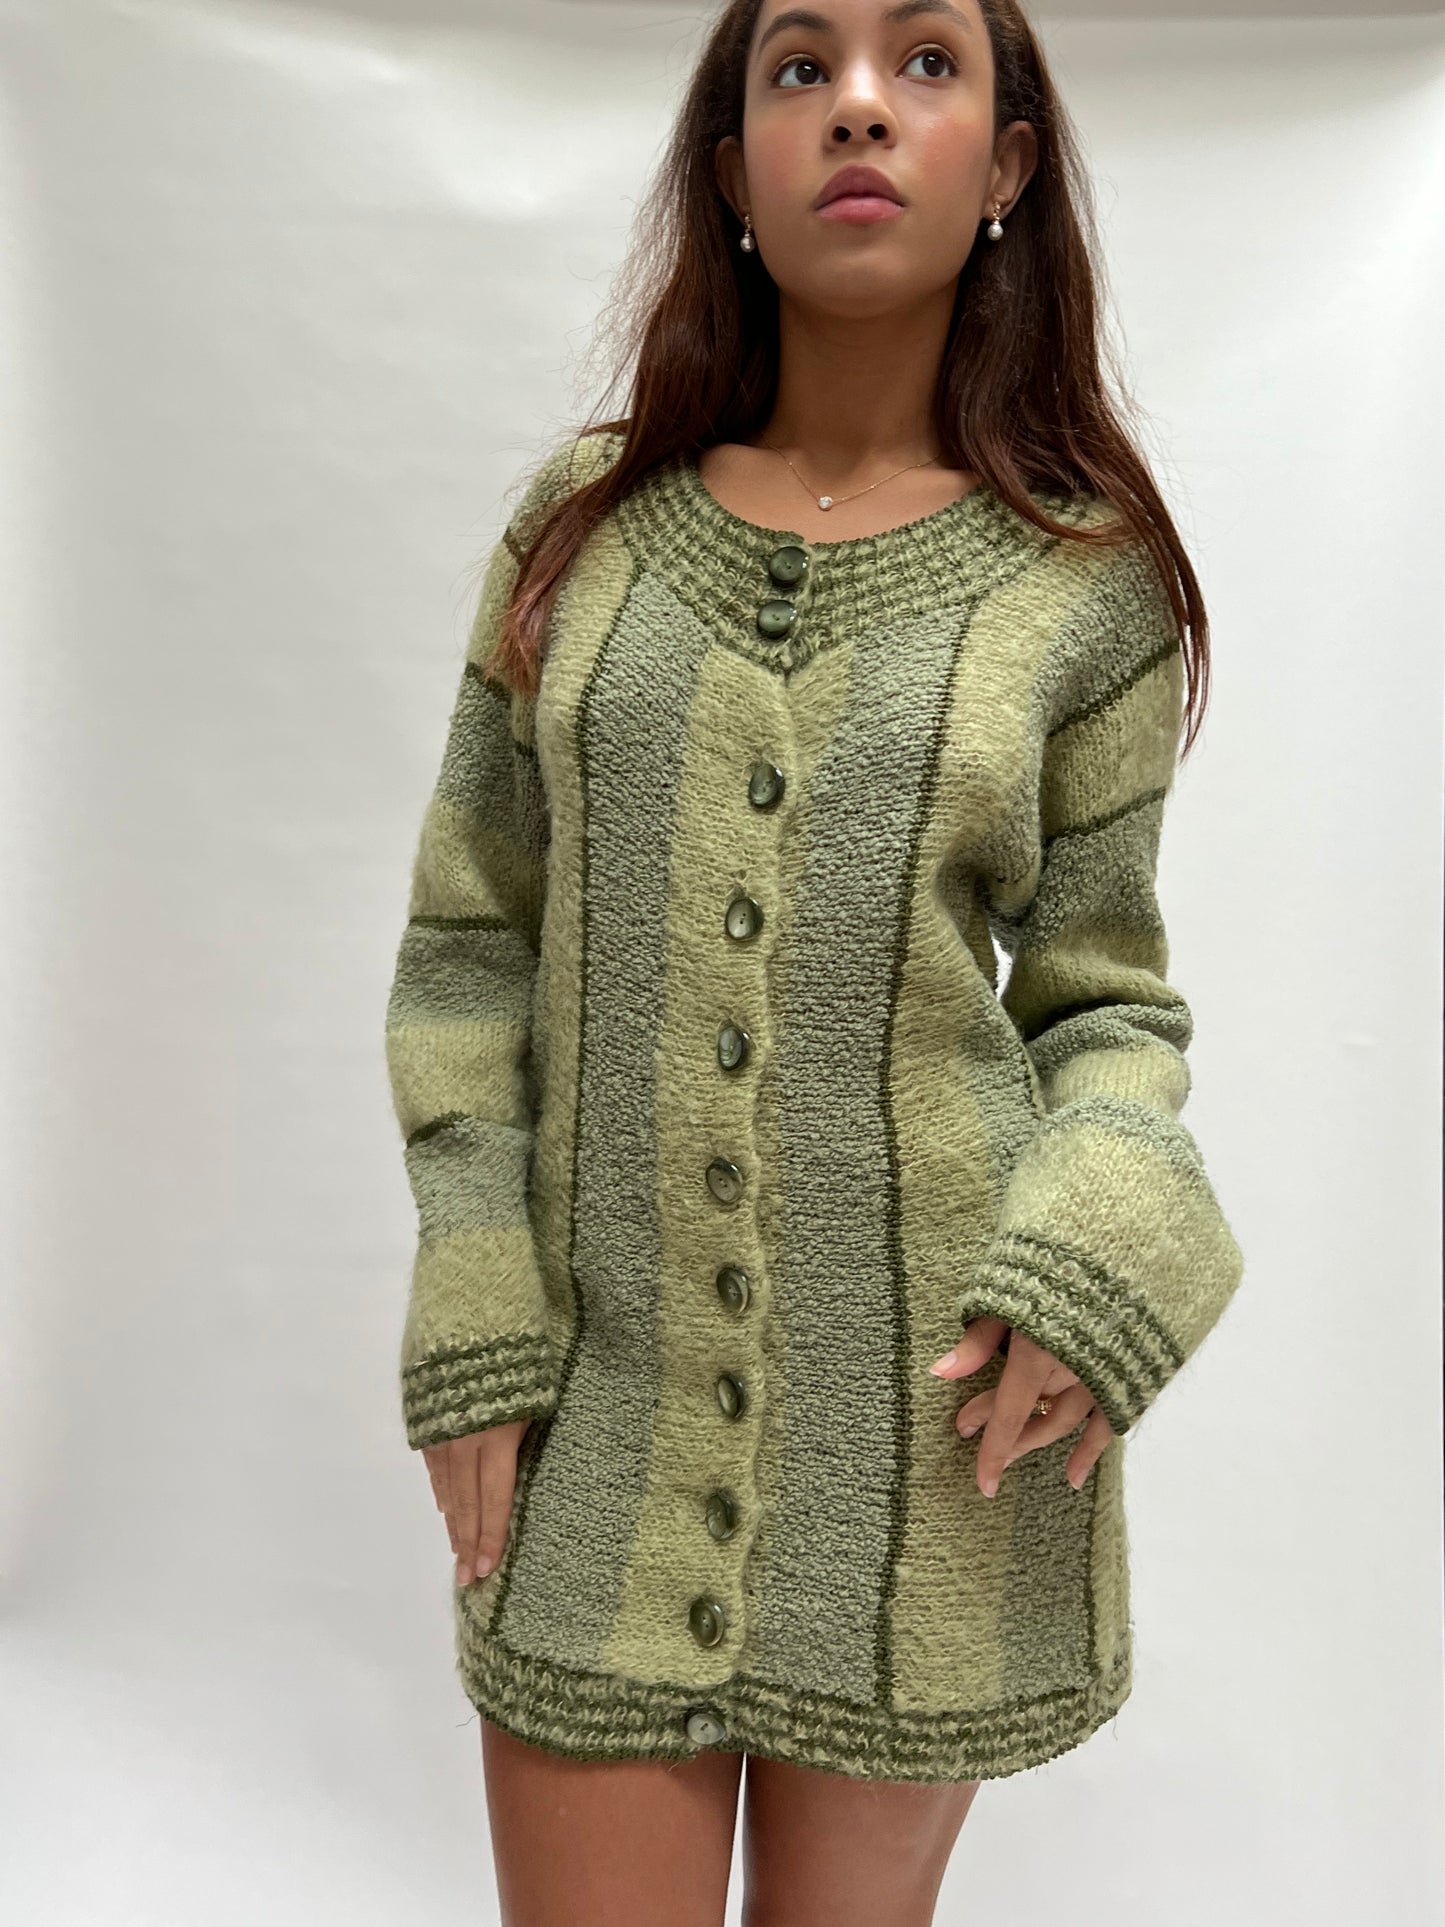 Vintage sweater dress